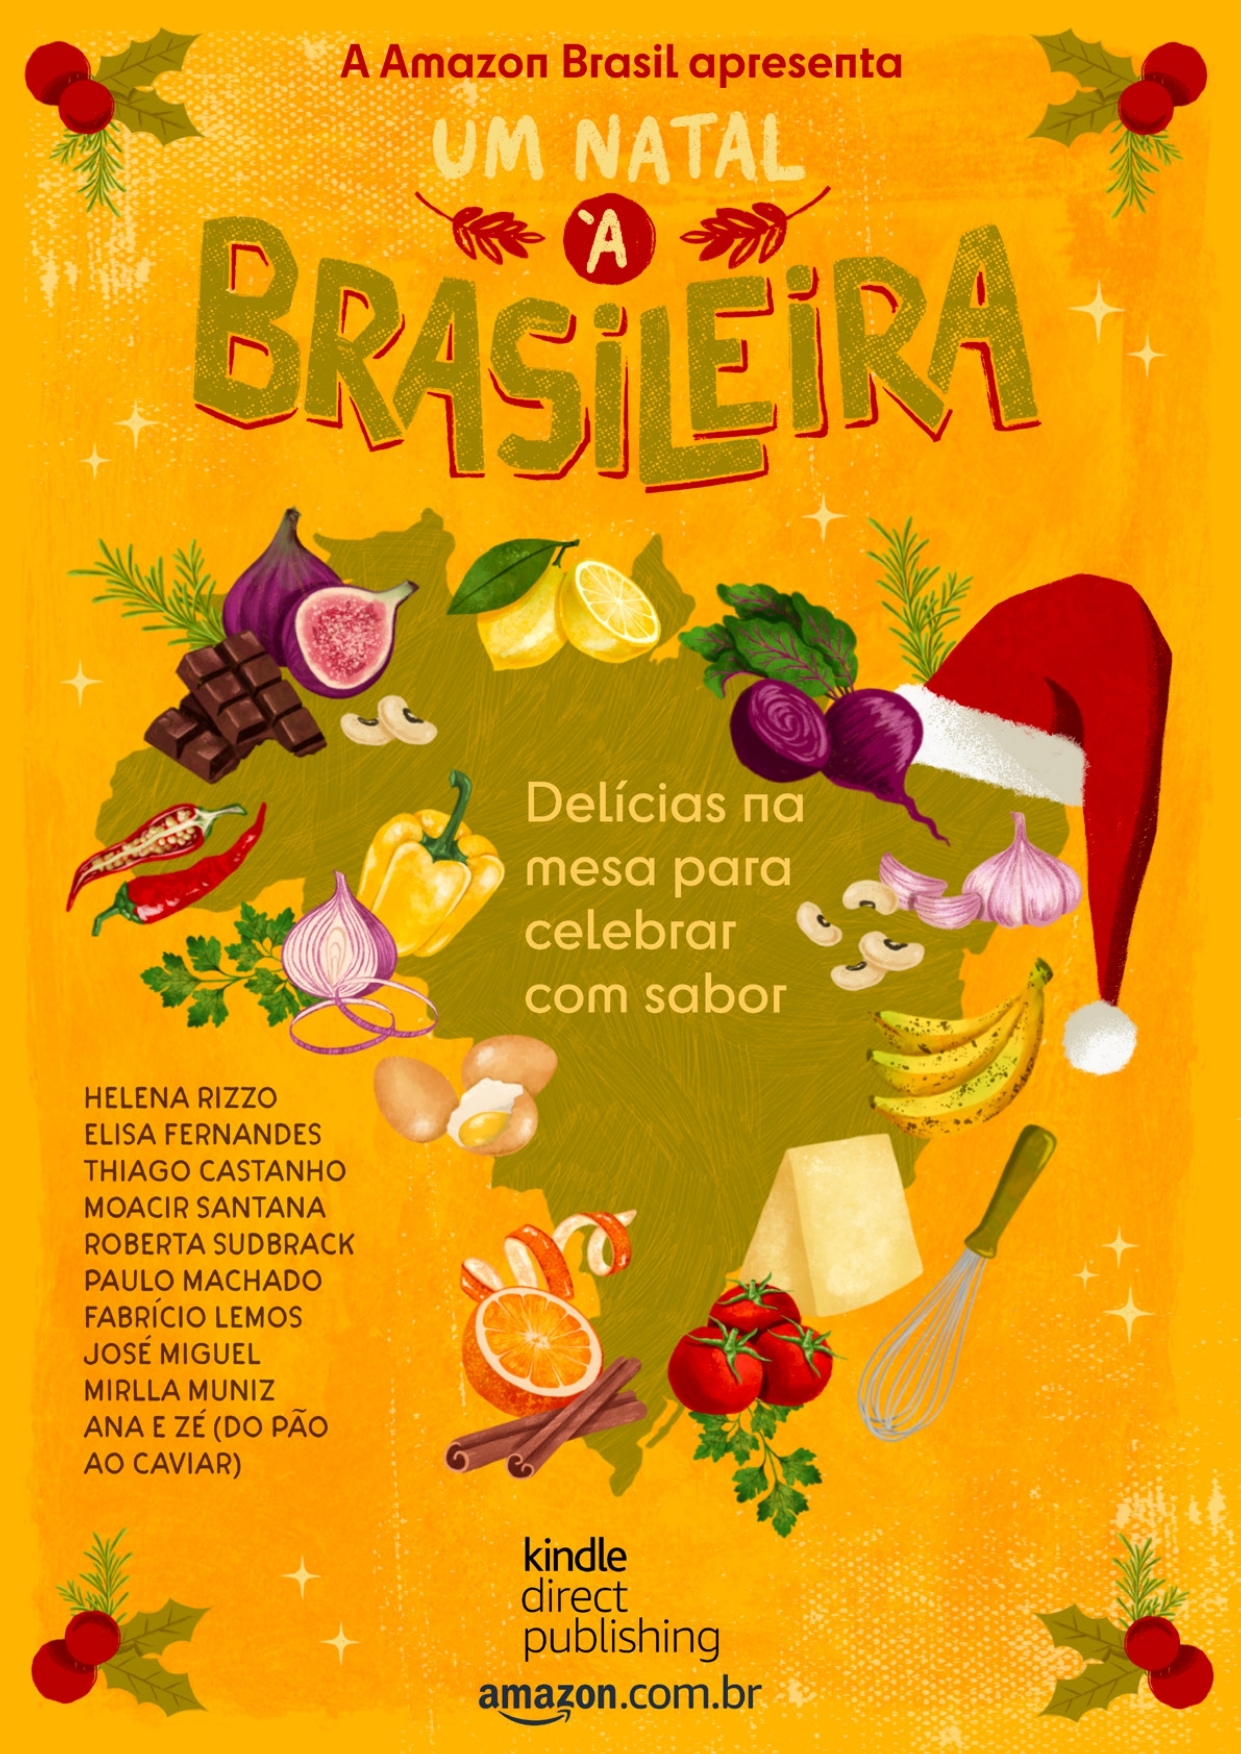 Amazon Brasil lança ebook com receitas de Natal